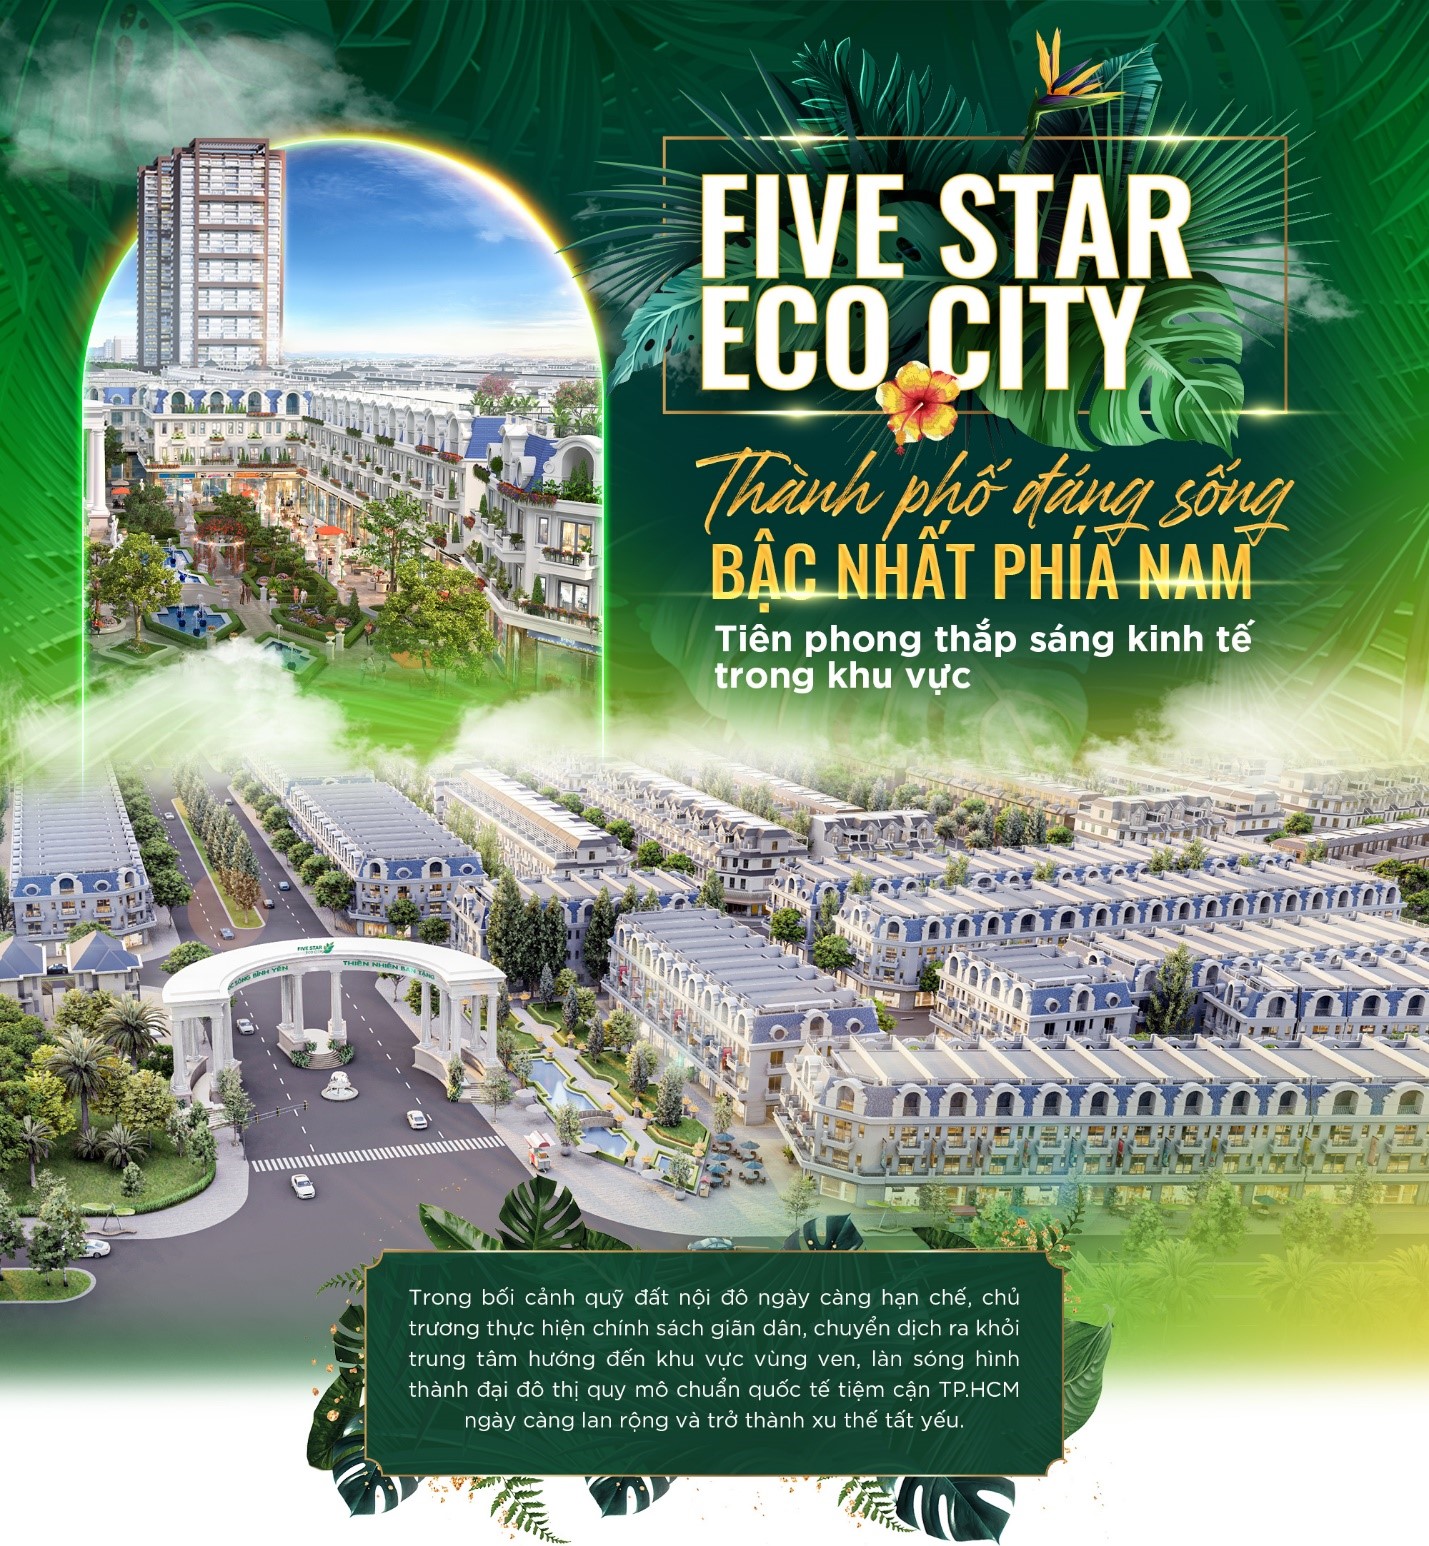 1.Five-star-eco-city-thanh-pho-dang-song-bac-nhat-phia-nam